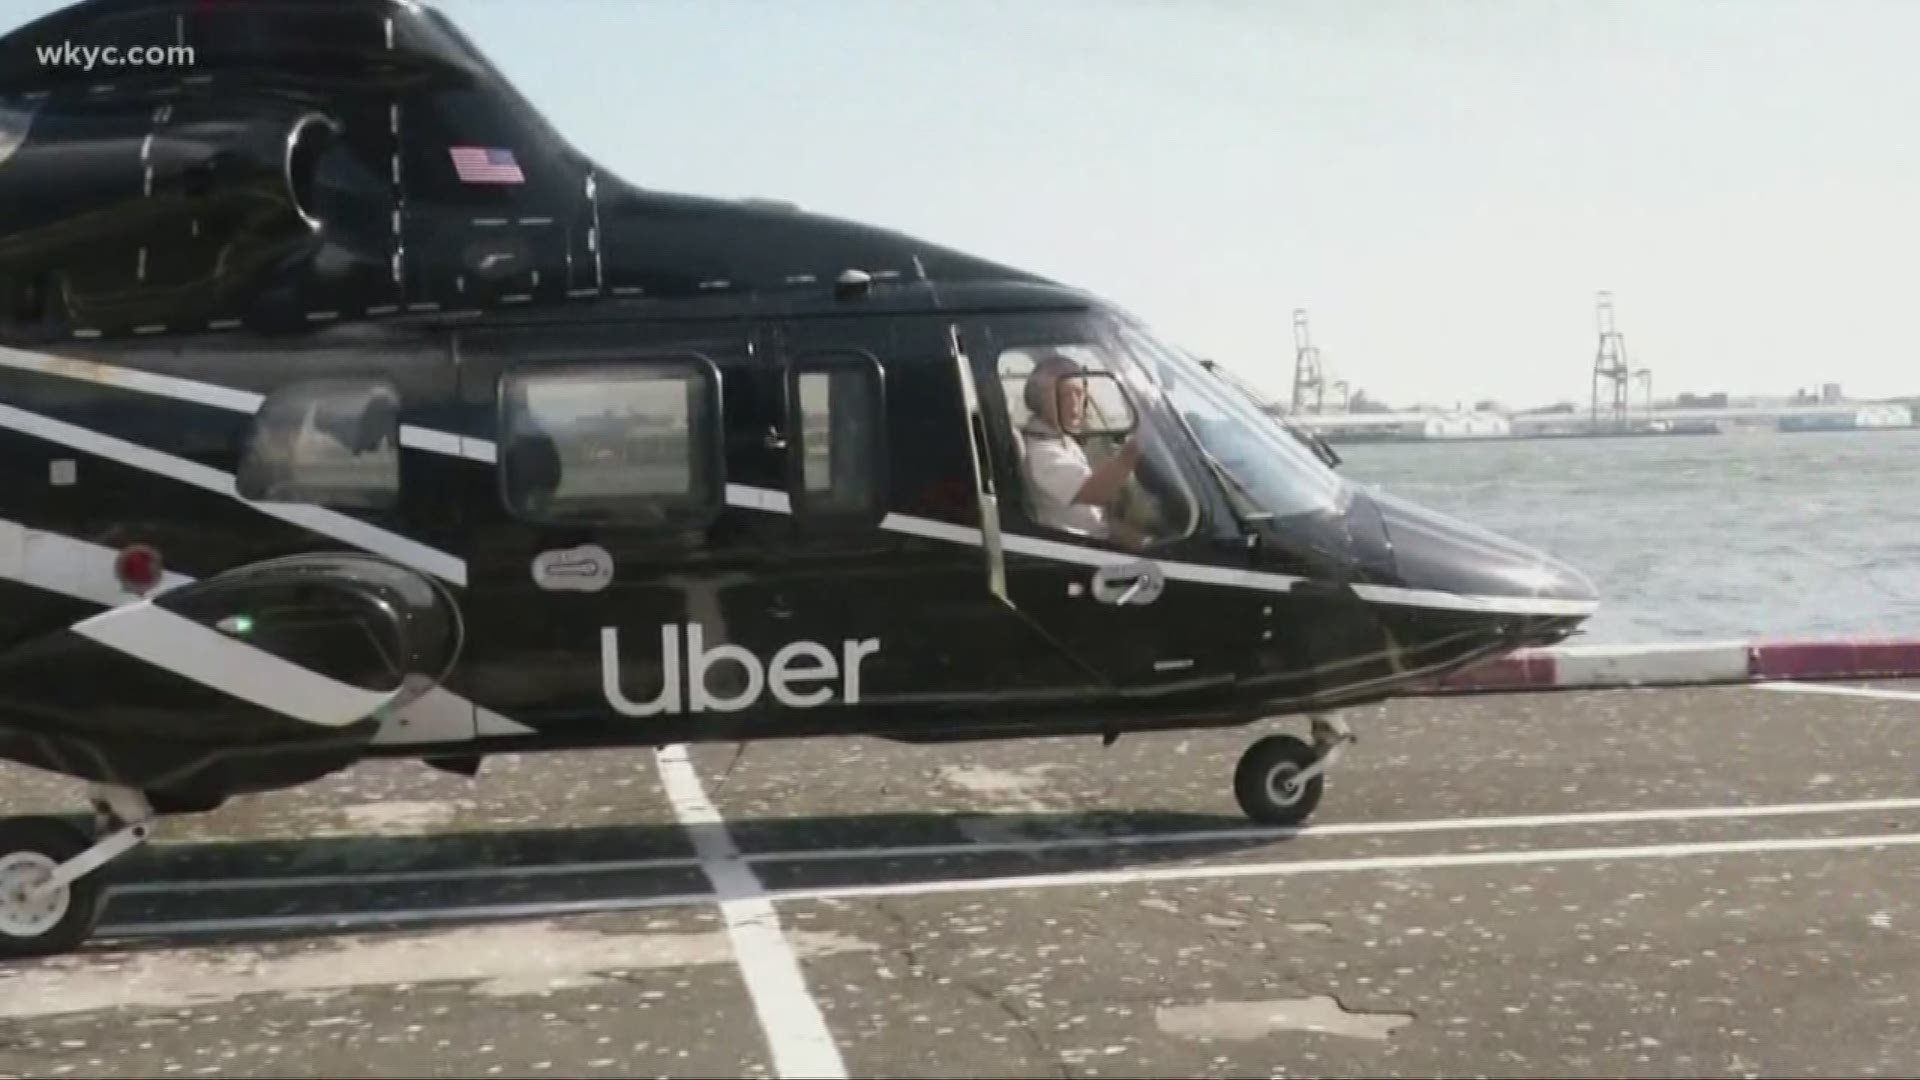 Uber is taking flight